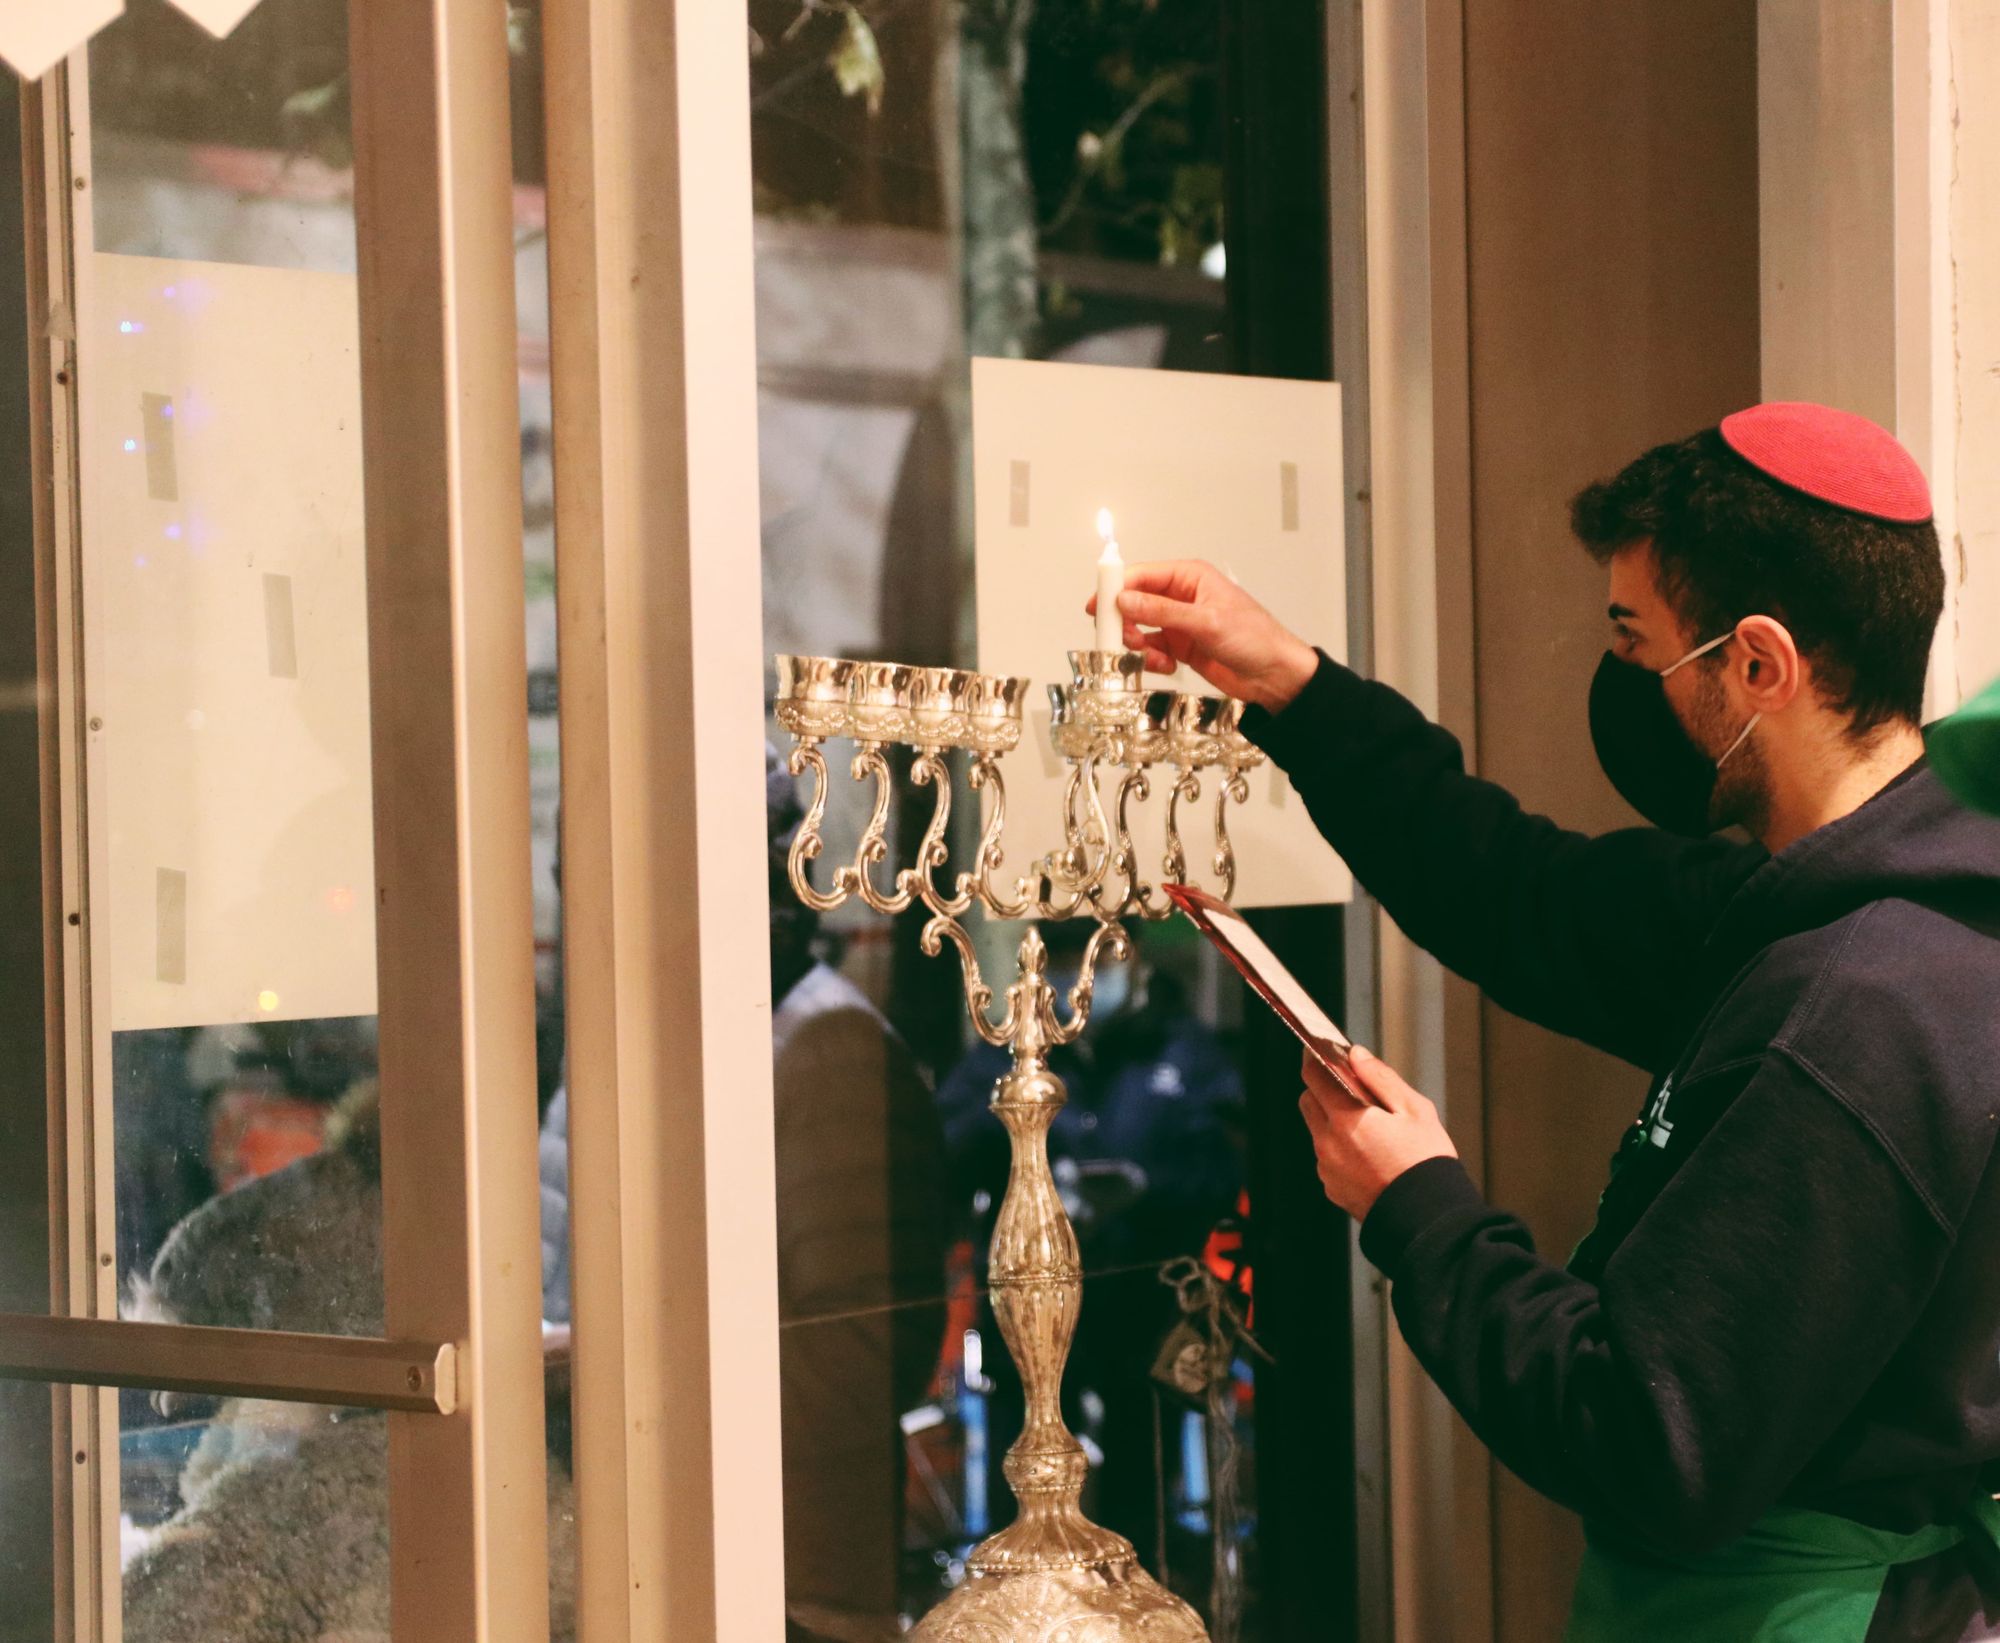 Masbia Soup Kitchen Celebrates The First Night Of Hanukkah